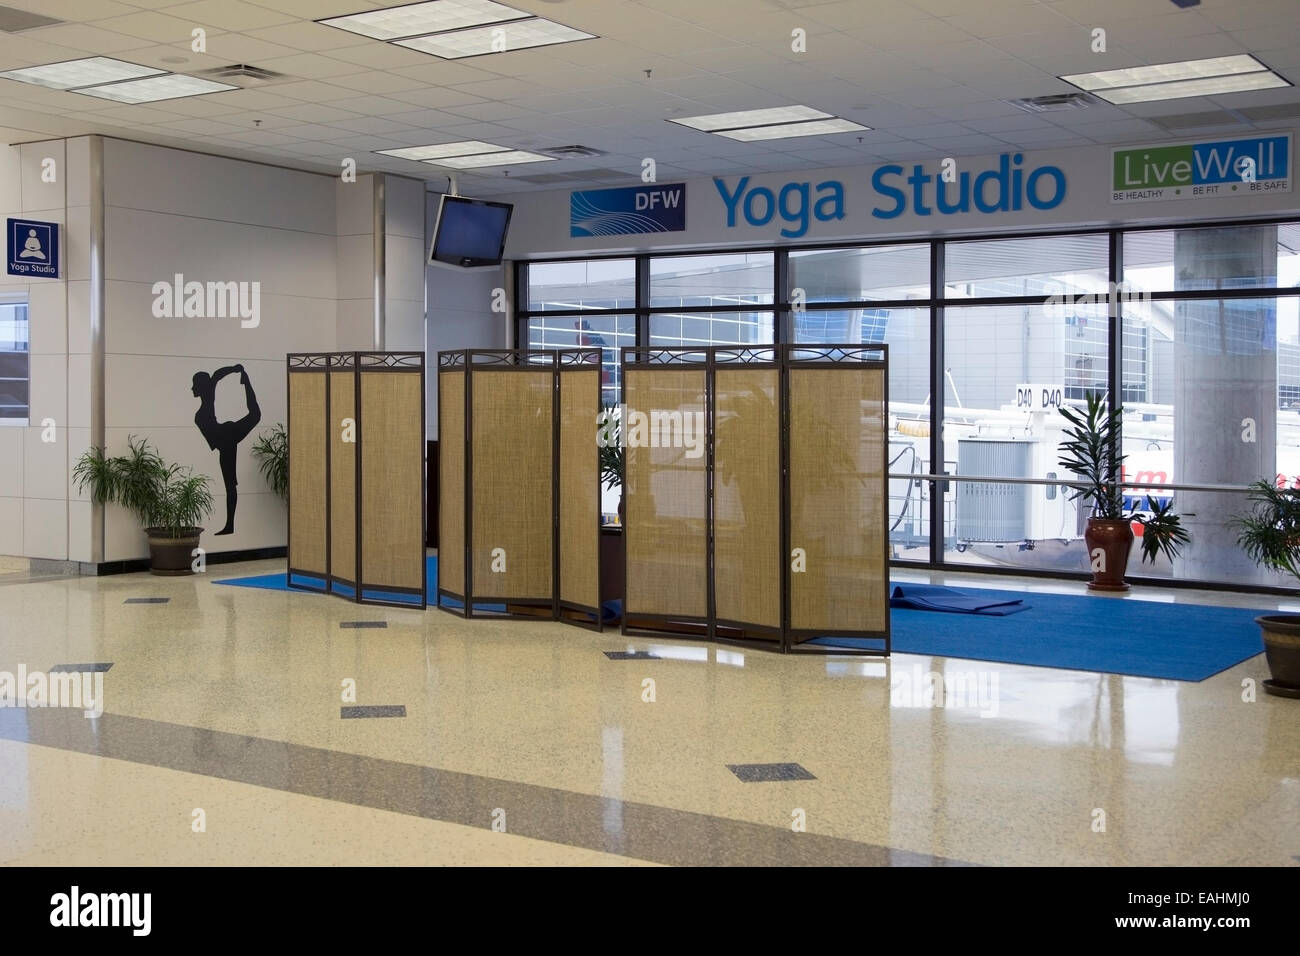 Yoga Studios in Dallas Fort Worth